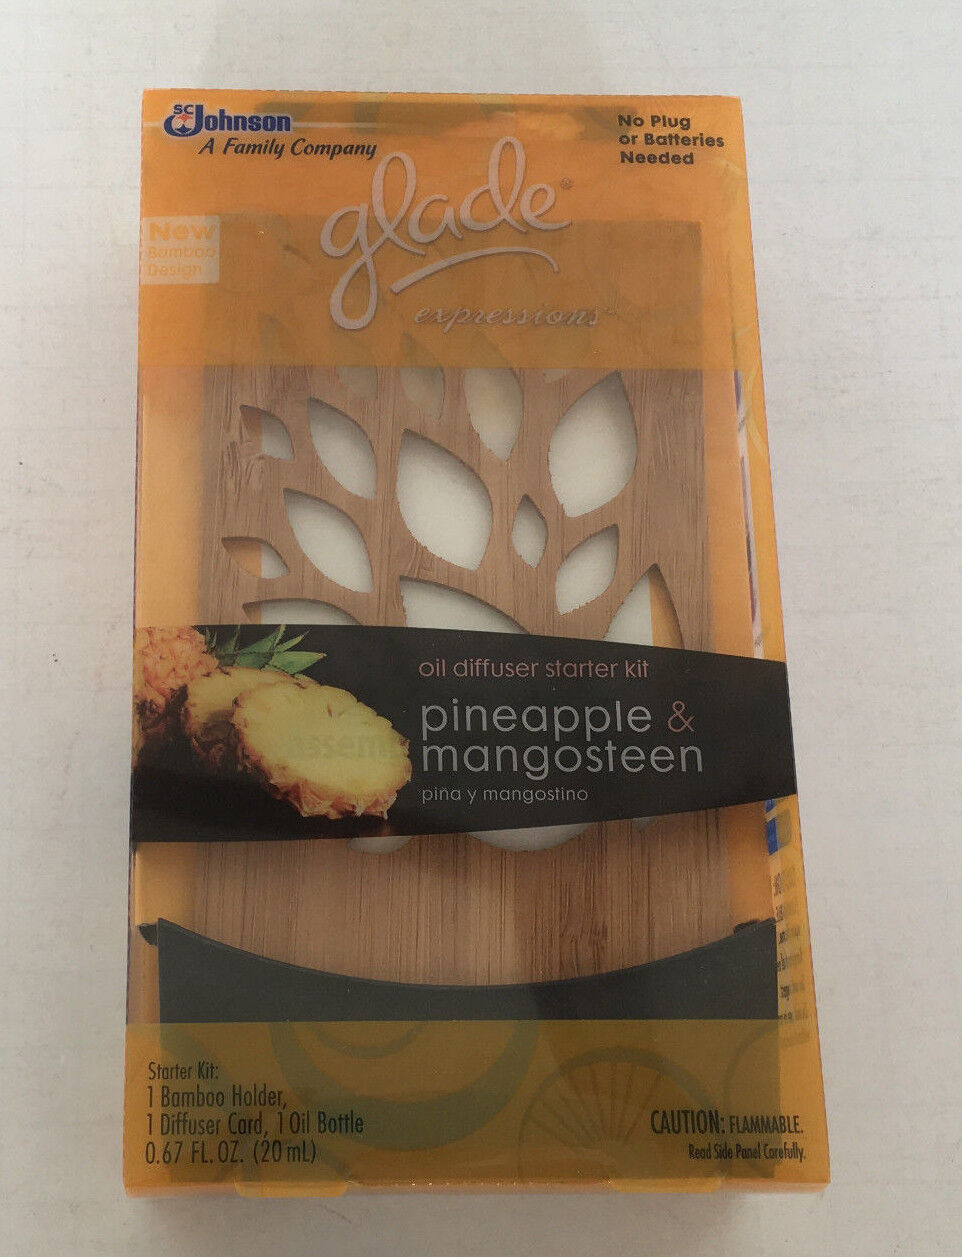 Glade oil diffuser starter kit pineapple and mangosteen scent 30 days fragrance - $19.75